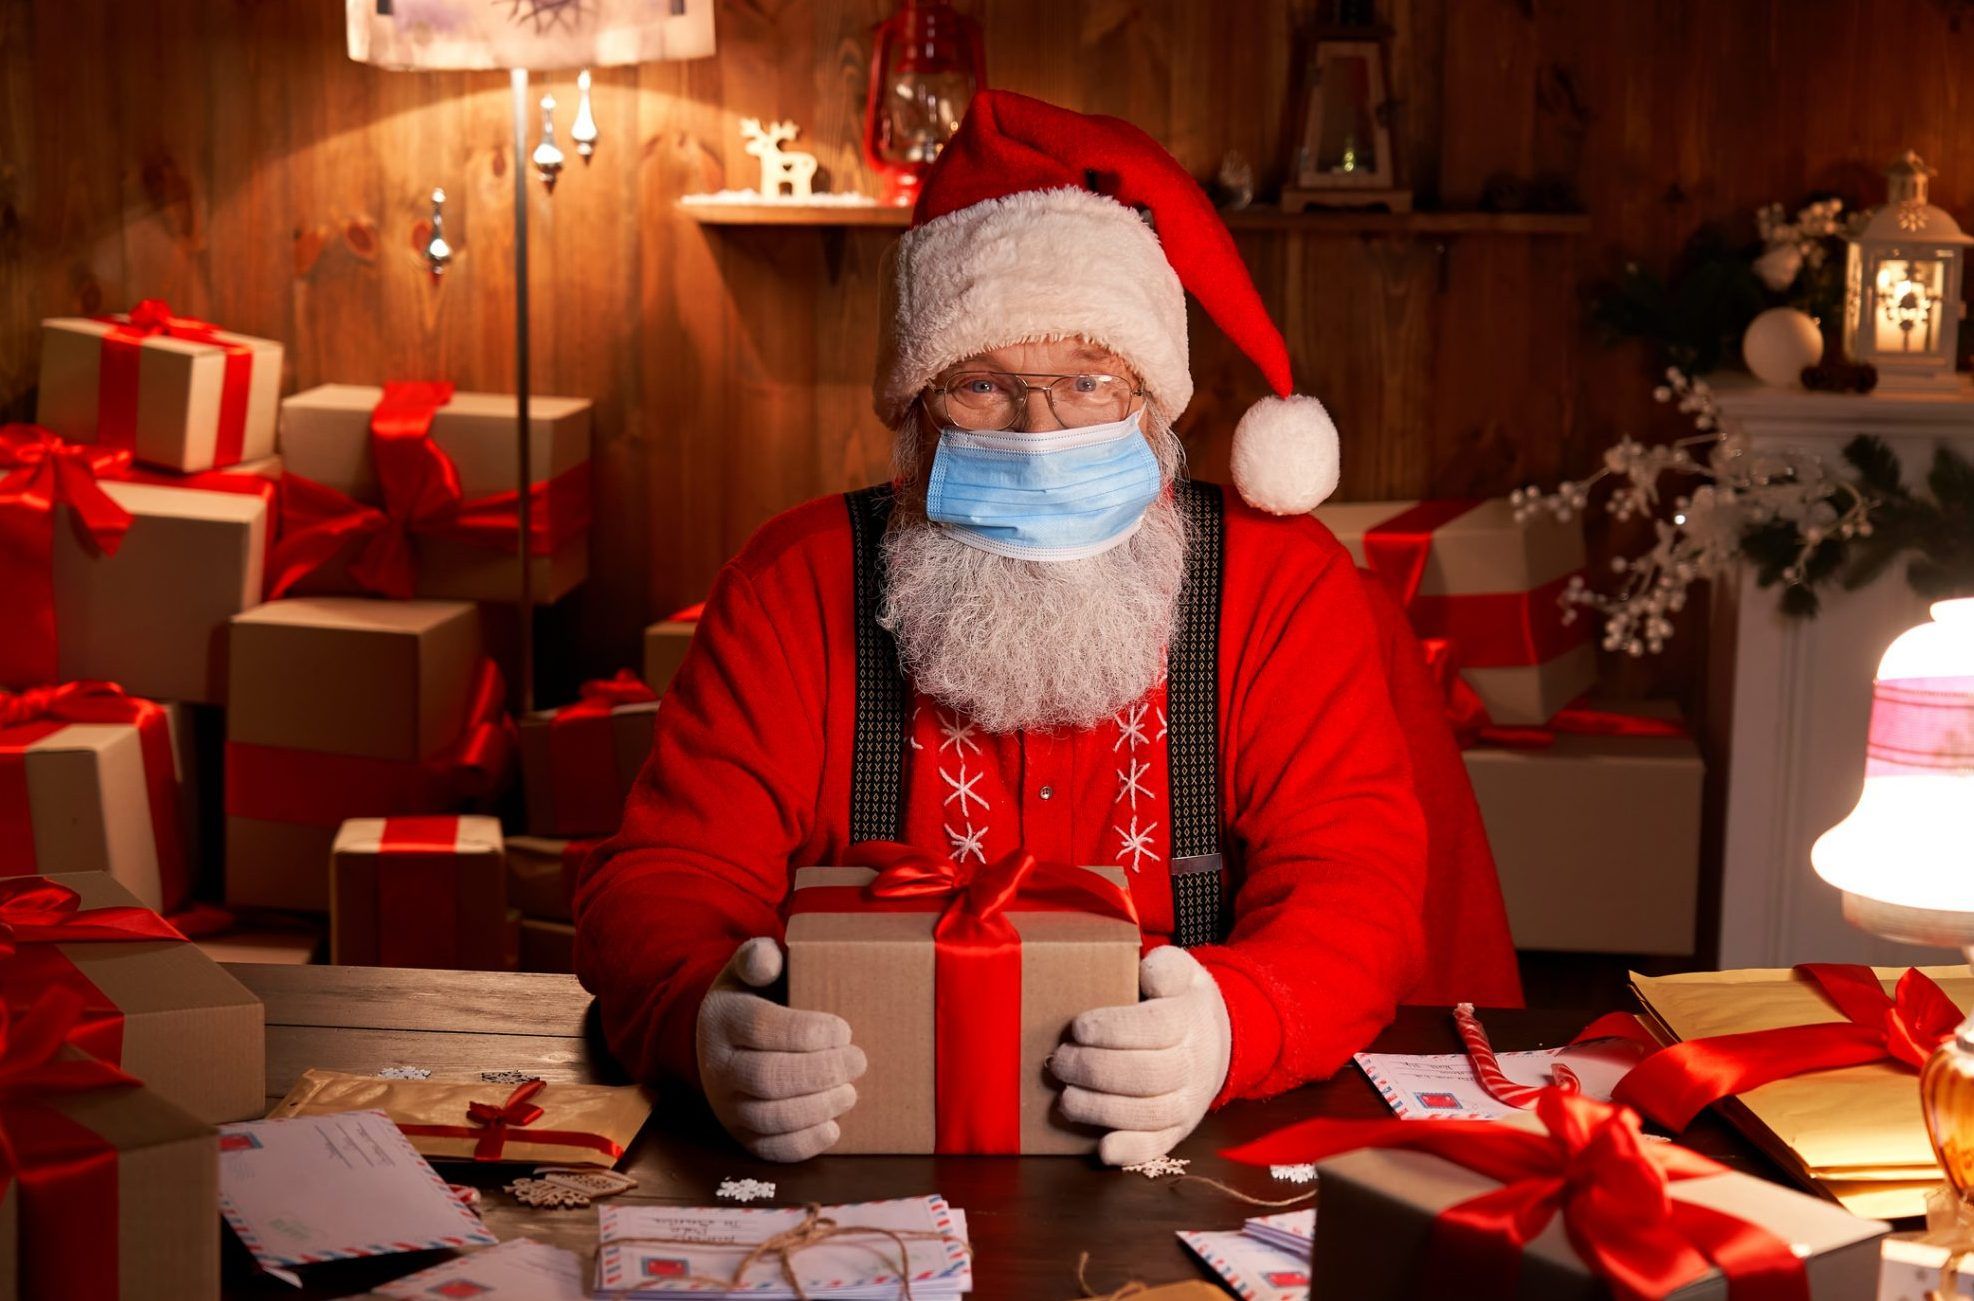 Mall "Santa Cause" Denies a Little Boy His Christmas Wish